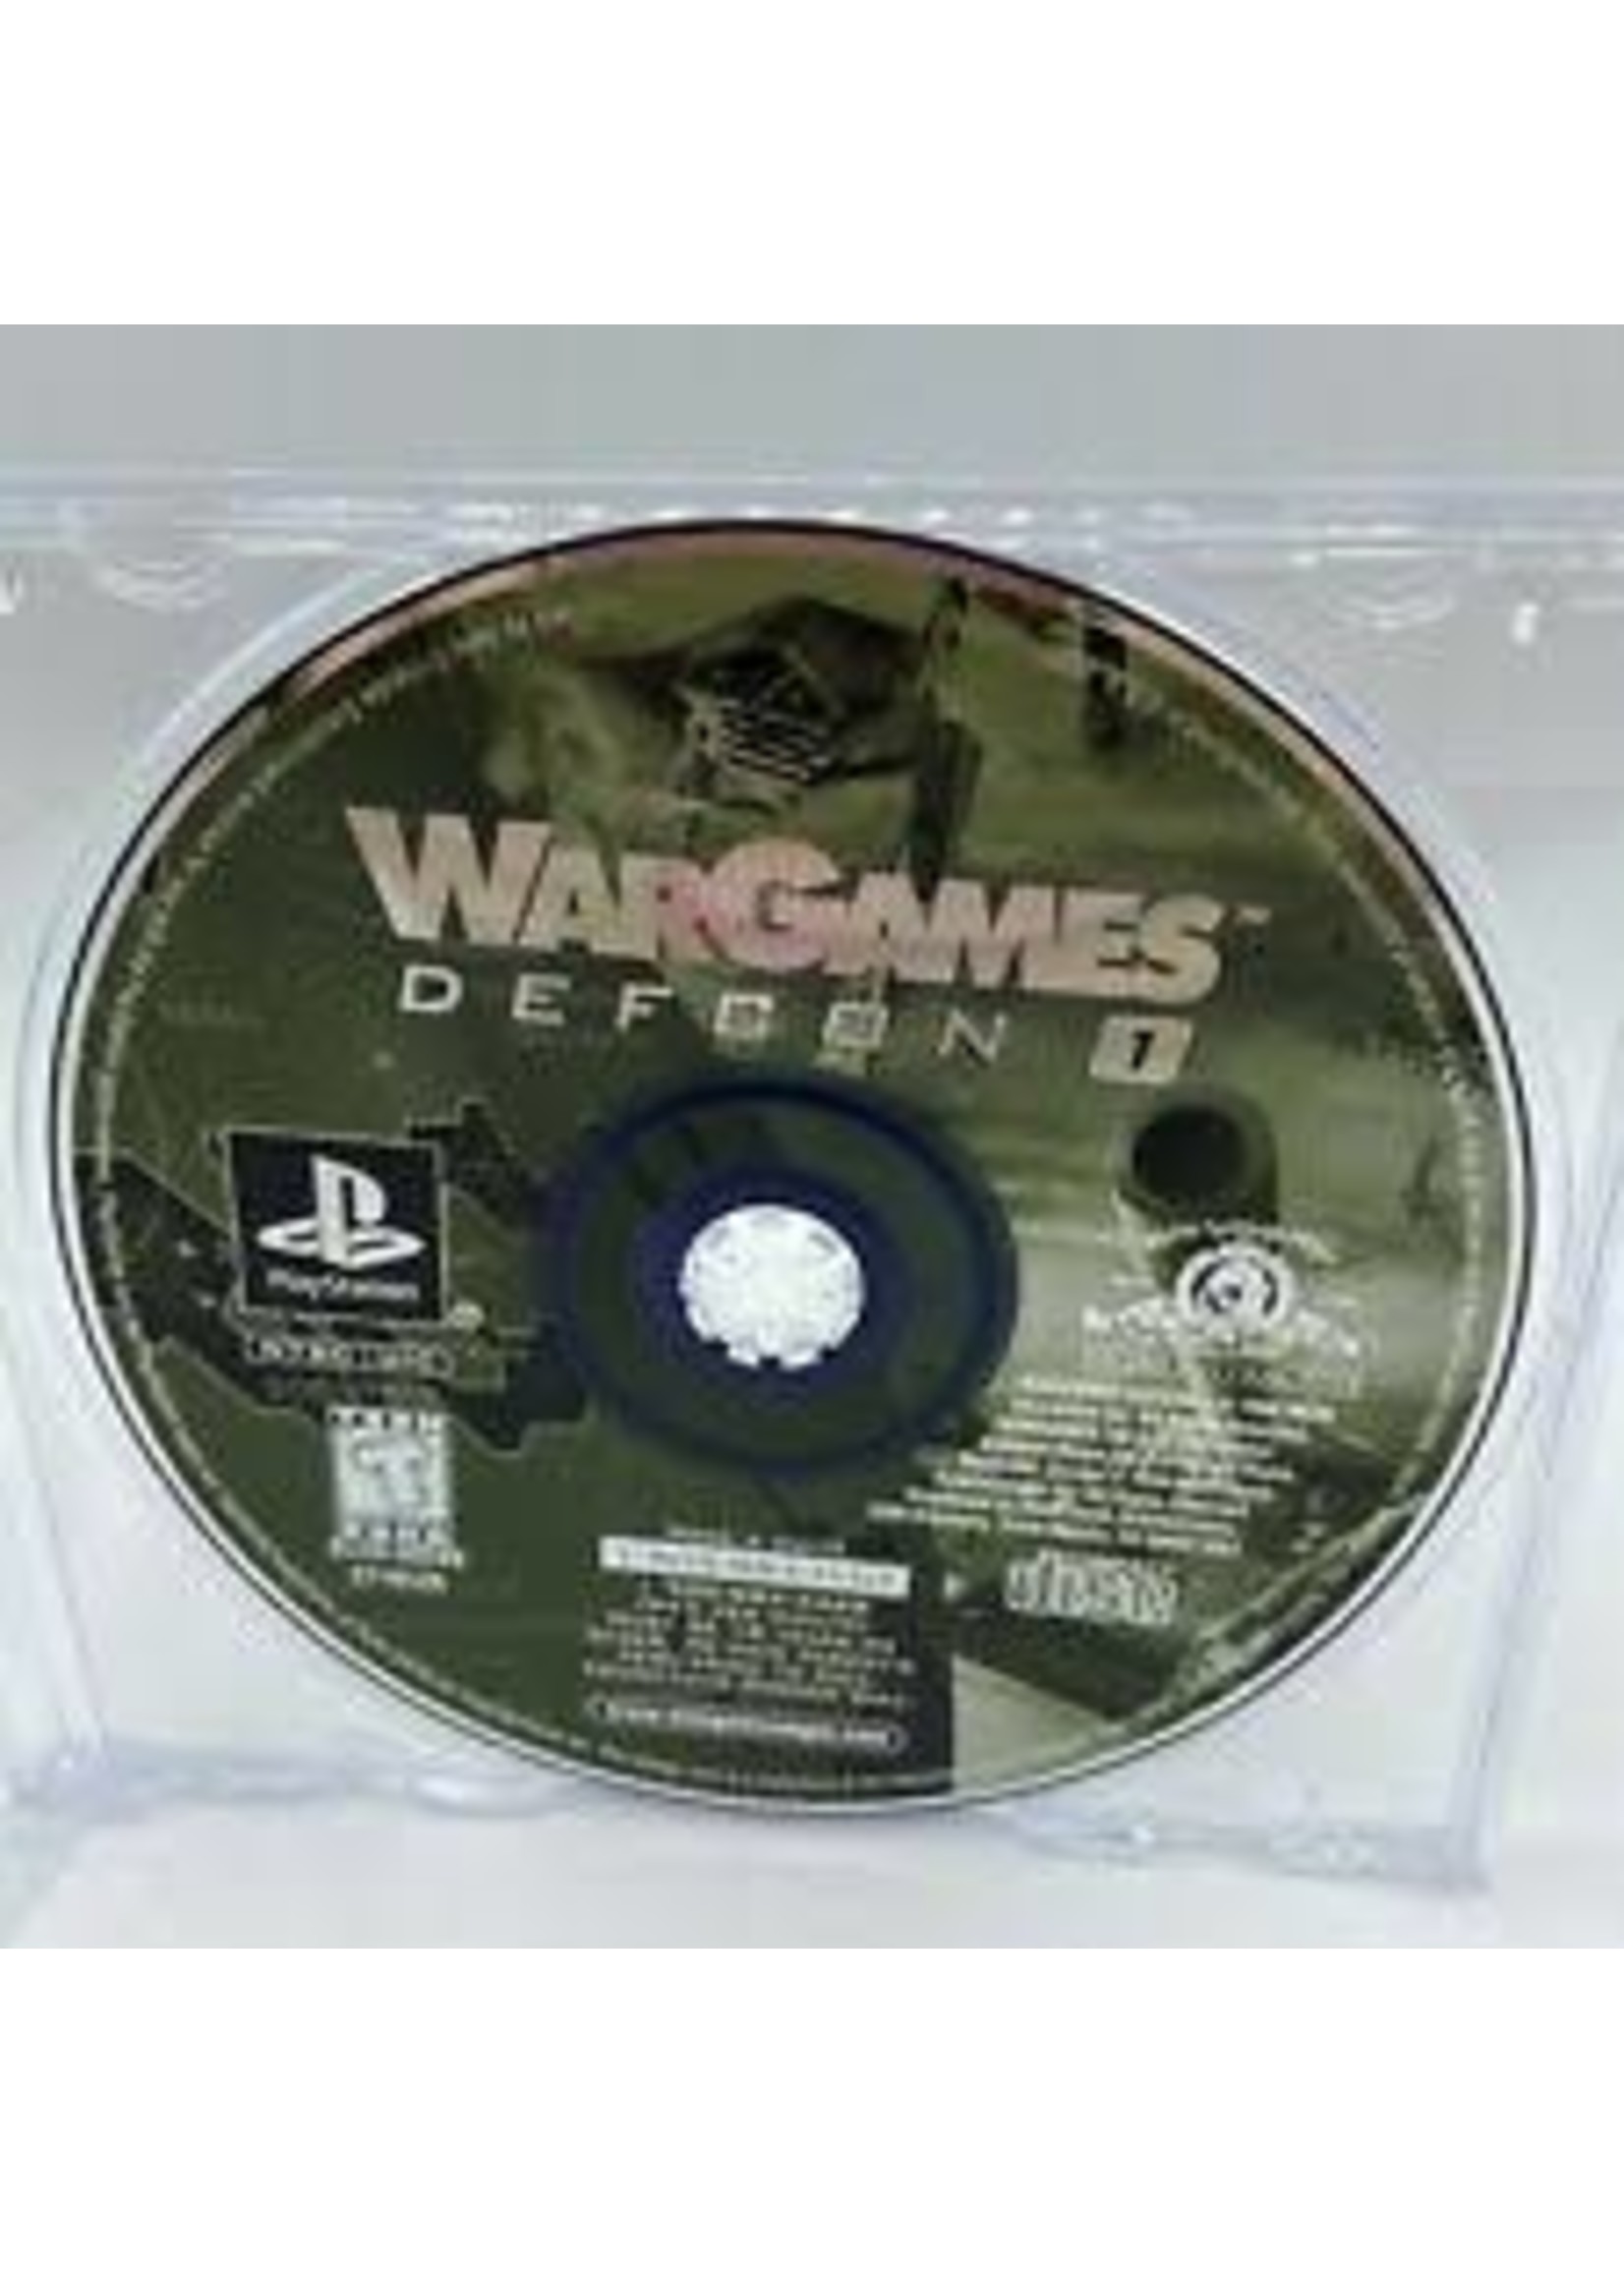 Sony Playstation 1 (PS1) War Games Defcon 1 - Print